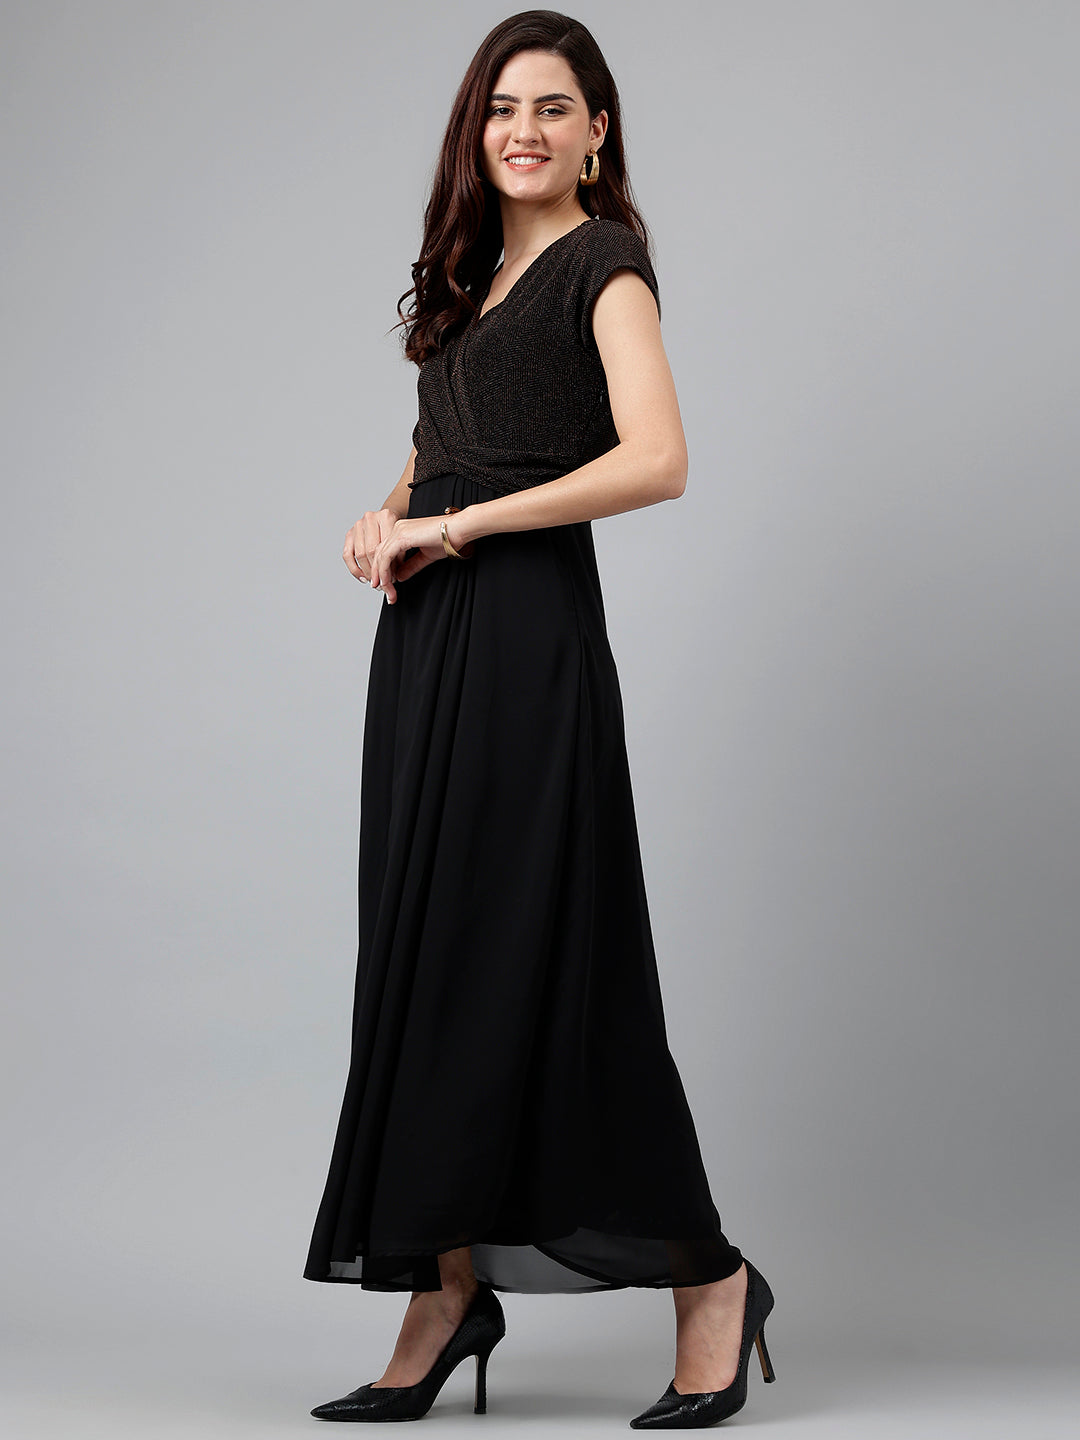 Black Cap Sleeve VNeck Maxi Dress Fit & Flare